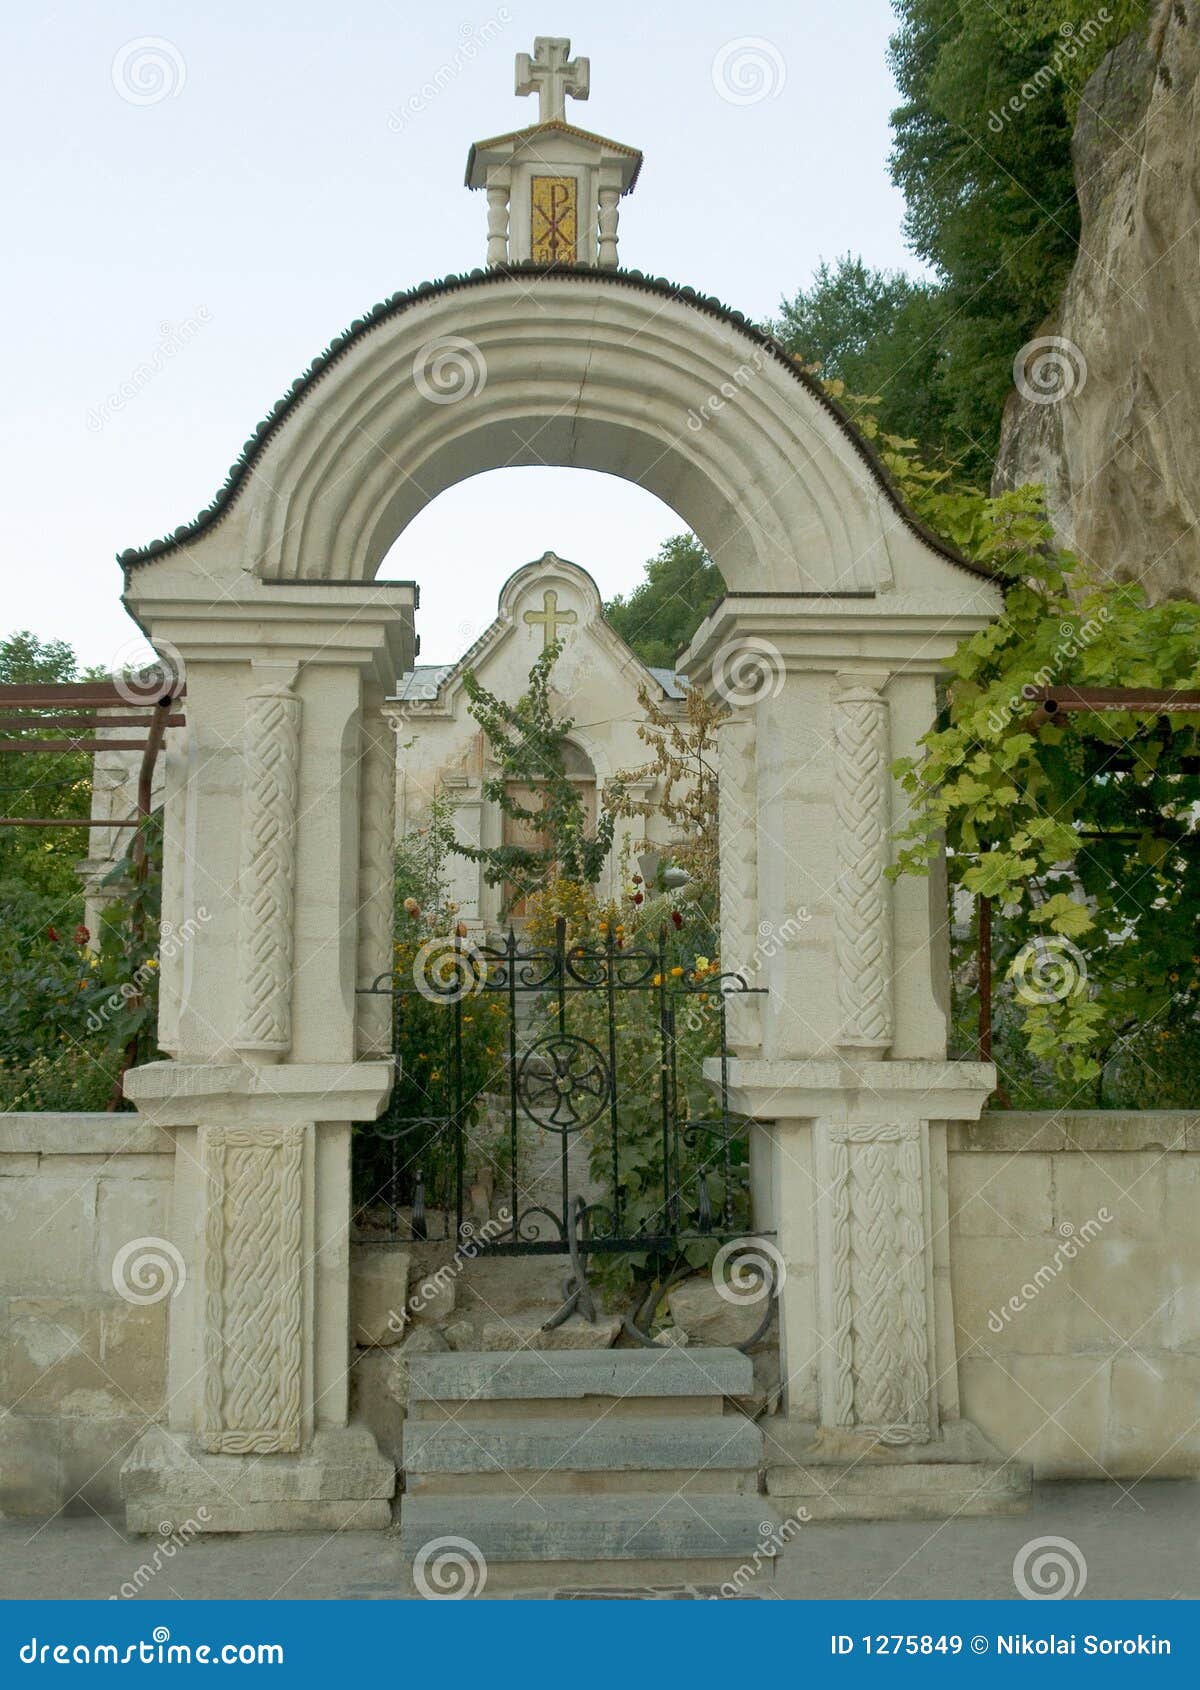 cemetery gates clipart - photo #33